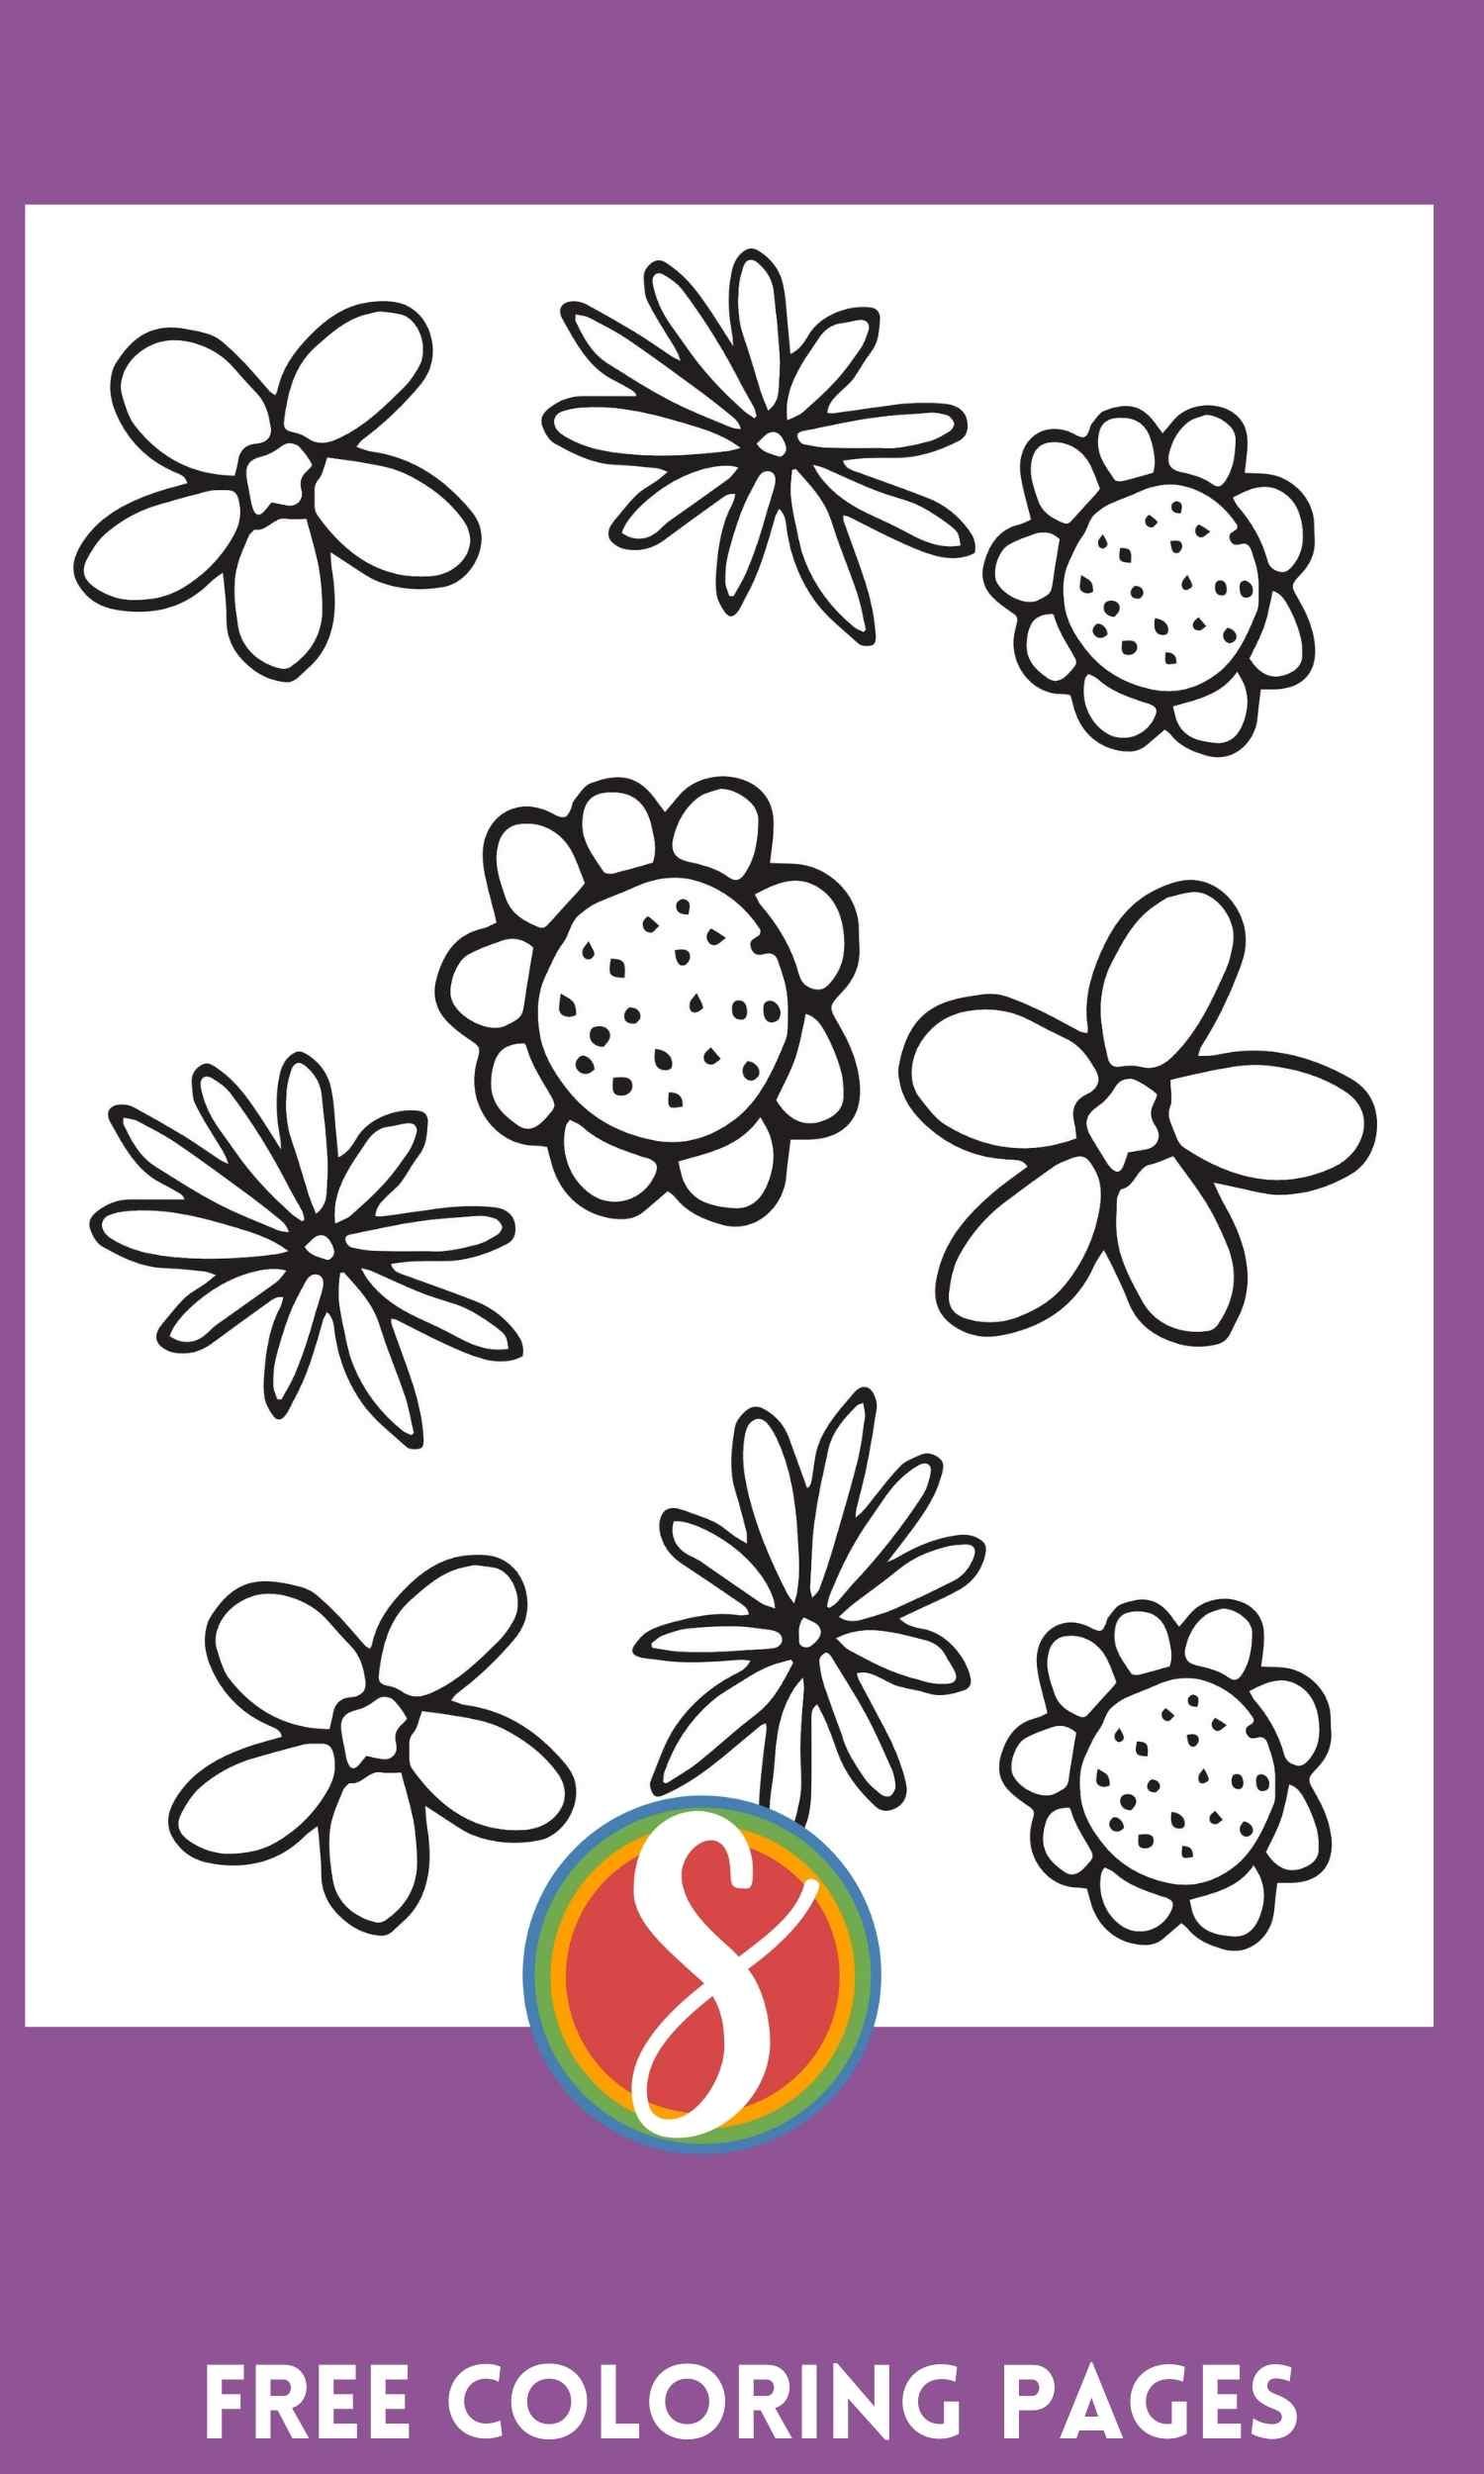 Free flower coloring pages â stevie doodles